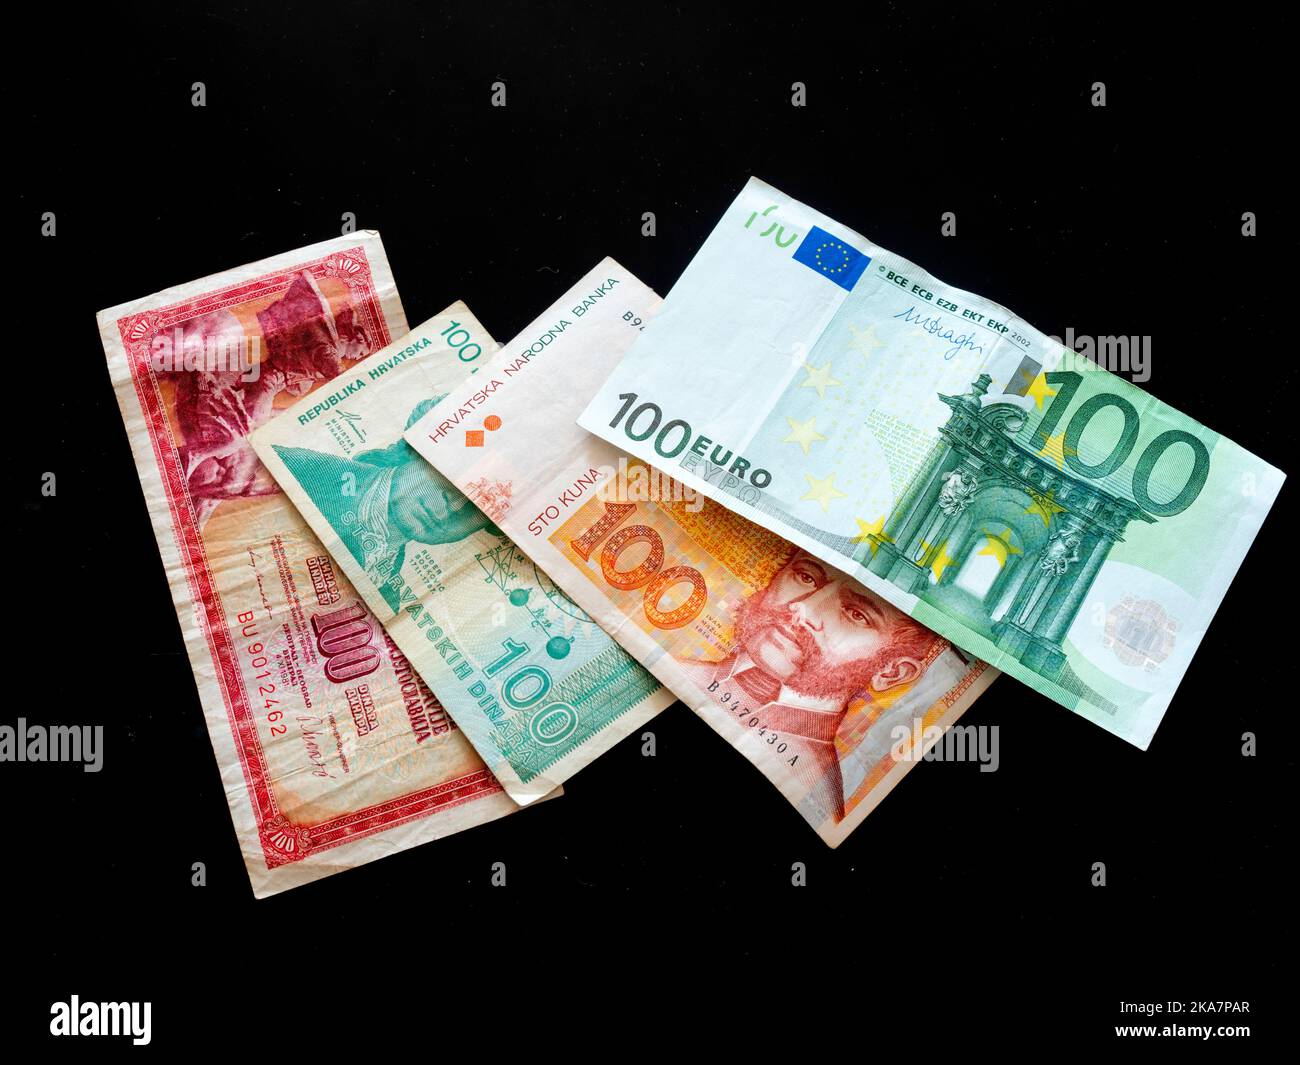 Croat Croatia banknotes of 100 Yugoslav Dinar Dinars Croatian Dinars Kuna Kune Kunas and EU Euro Euros on Black background Stock Photo